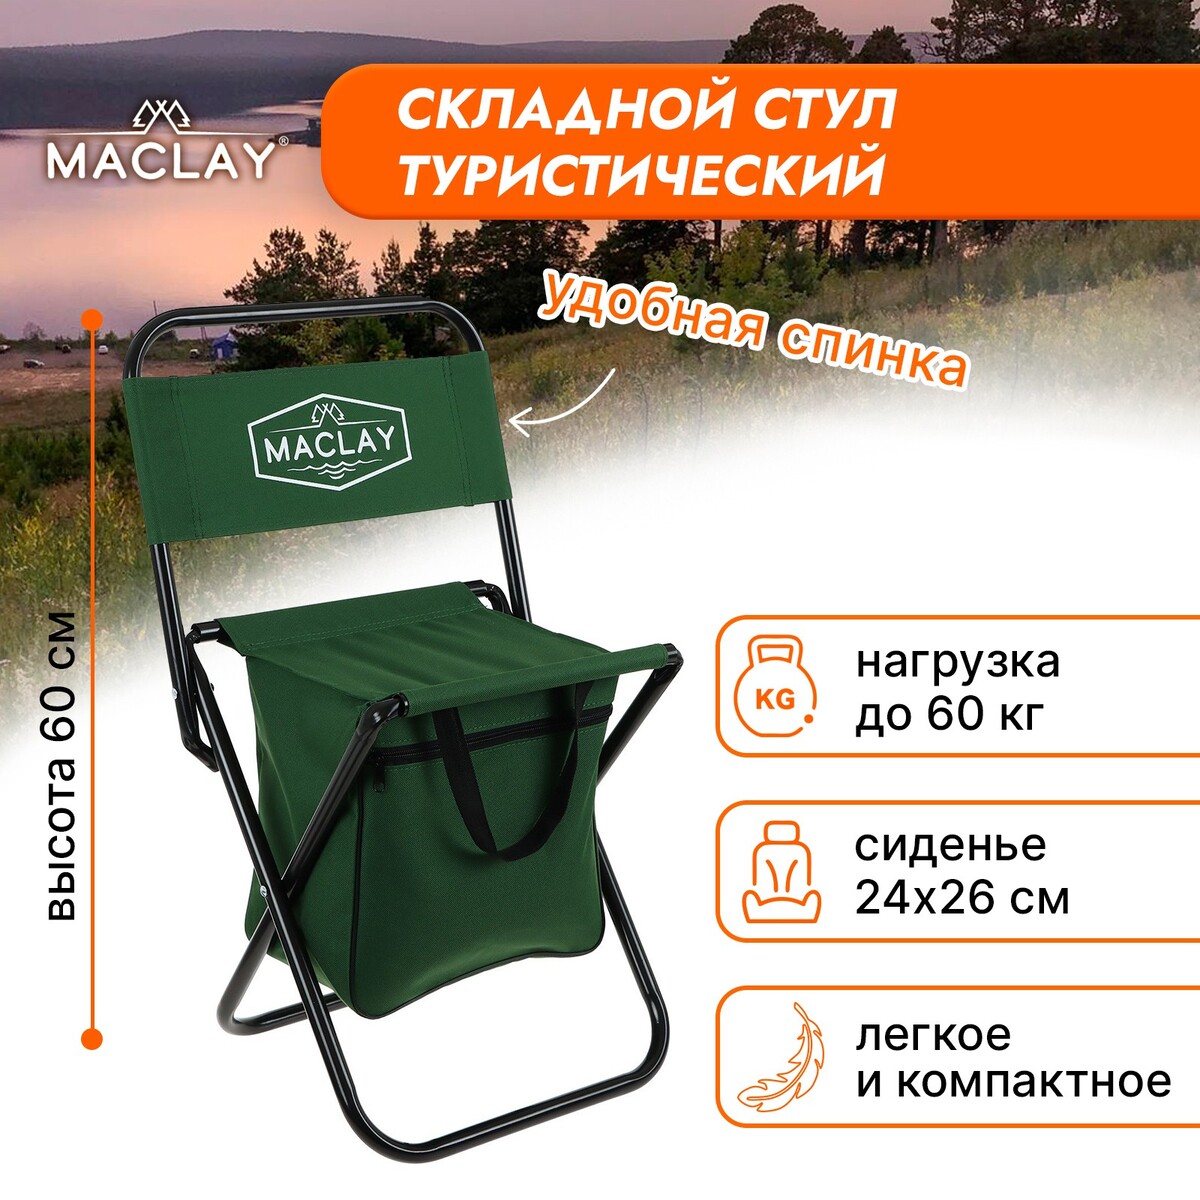 Стул туристический с сумкой, до 60 кг, размер 24 х 26 х 60 см, цвет зелёный Maclay 02643748 - фото 1